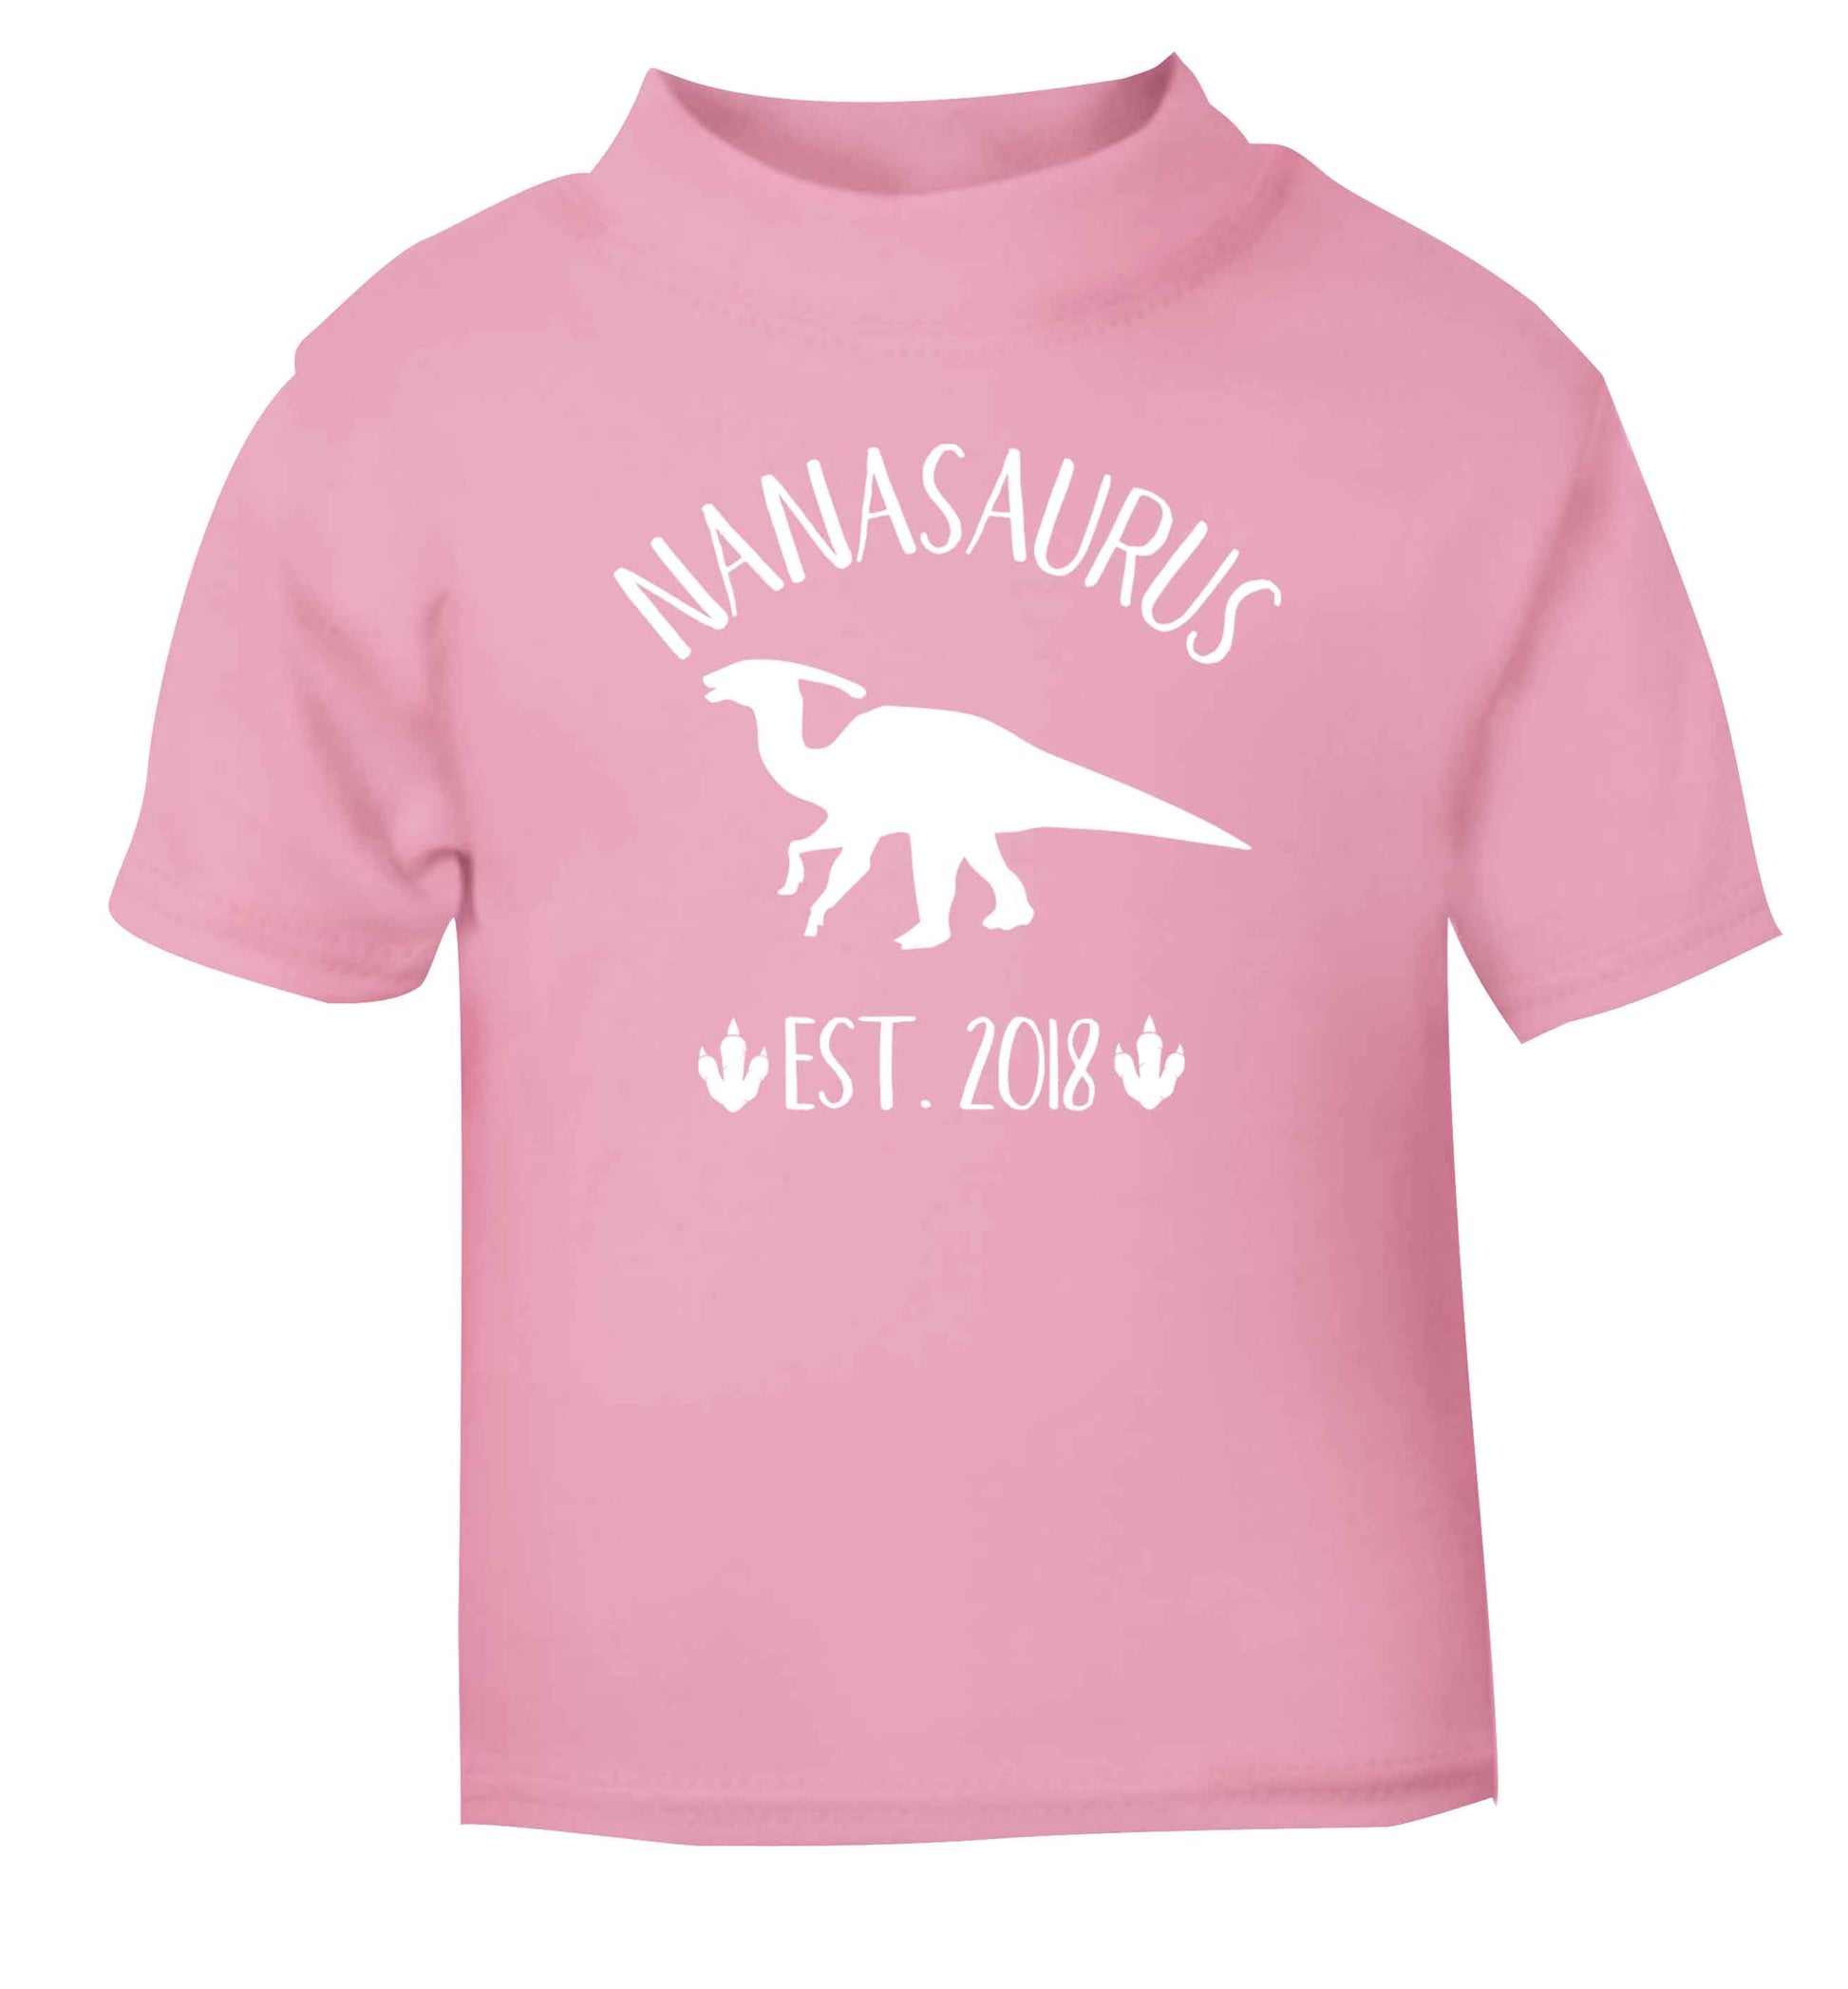 Personalised nanasaurus since (custom date) light pink Baby Toddler Tshirt 2 Years